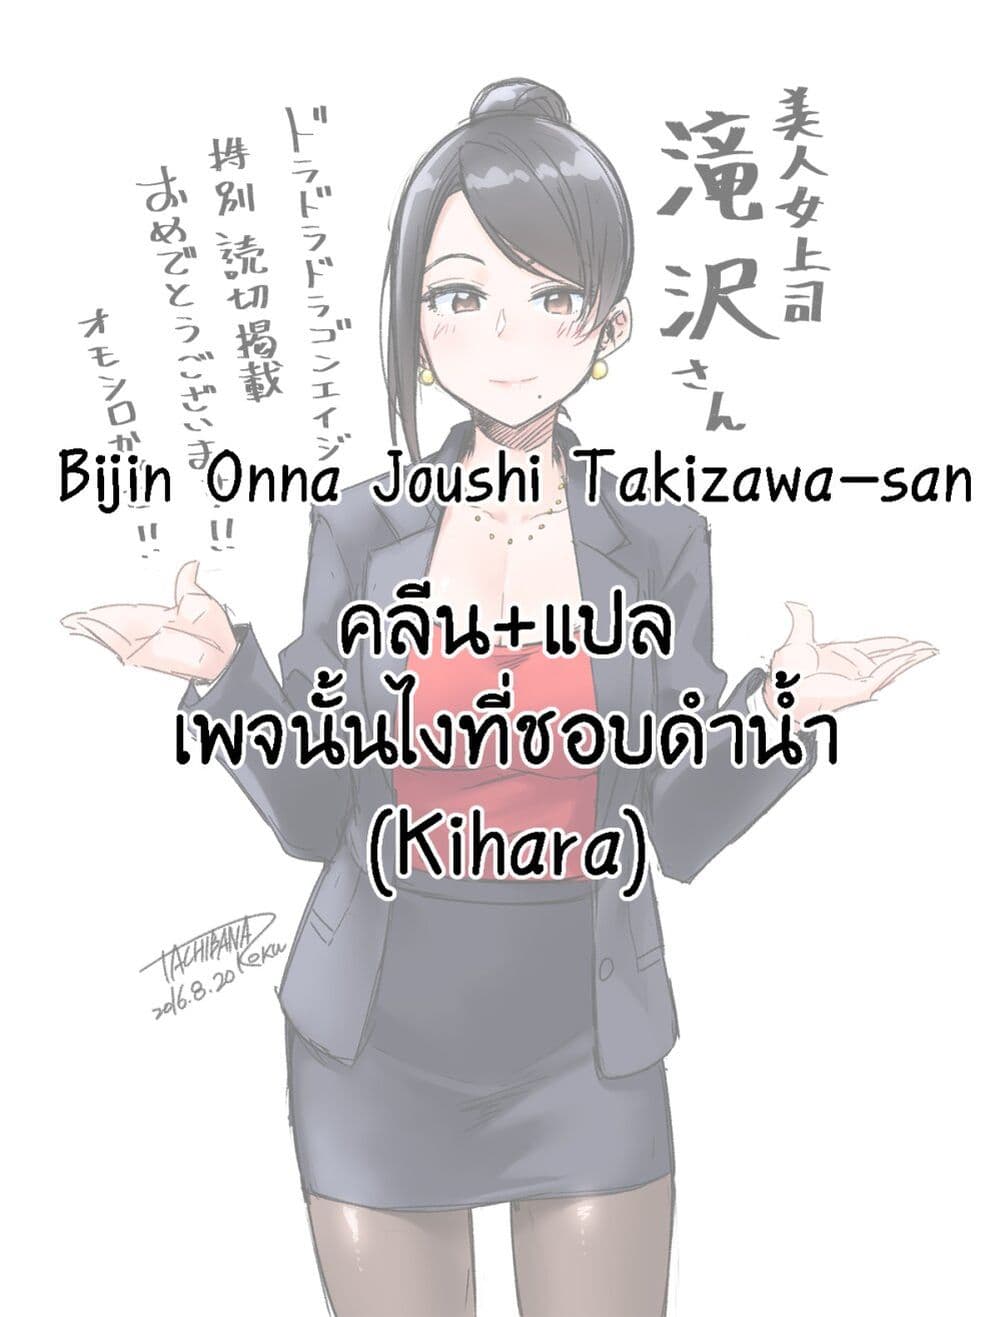 Bijin Onna Joushi Takizawa-san หัวหน้าสุดสวย ทากิซาวะซัง 14-14